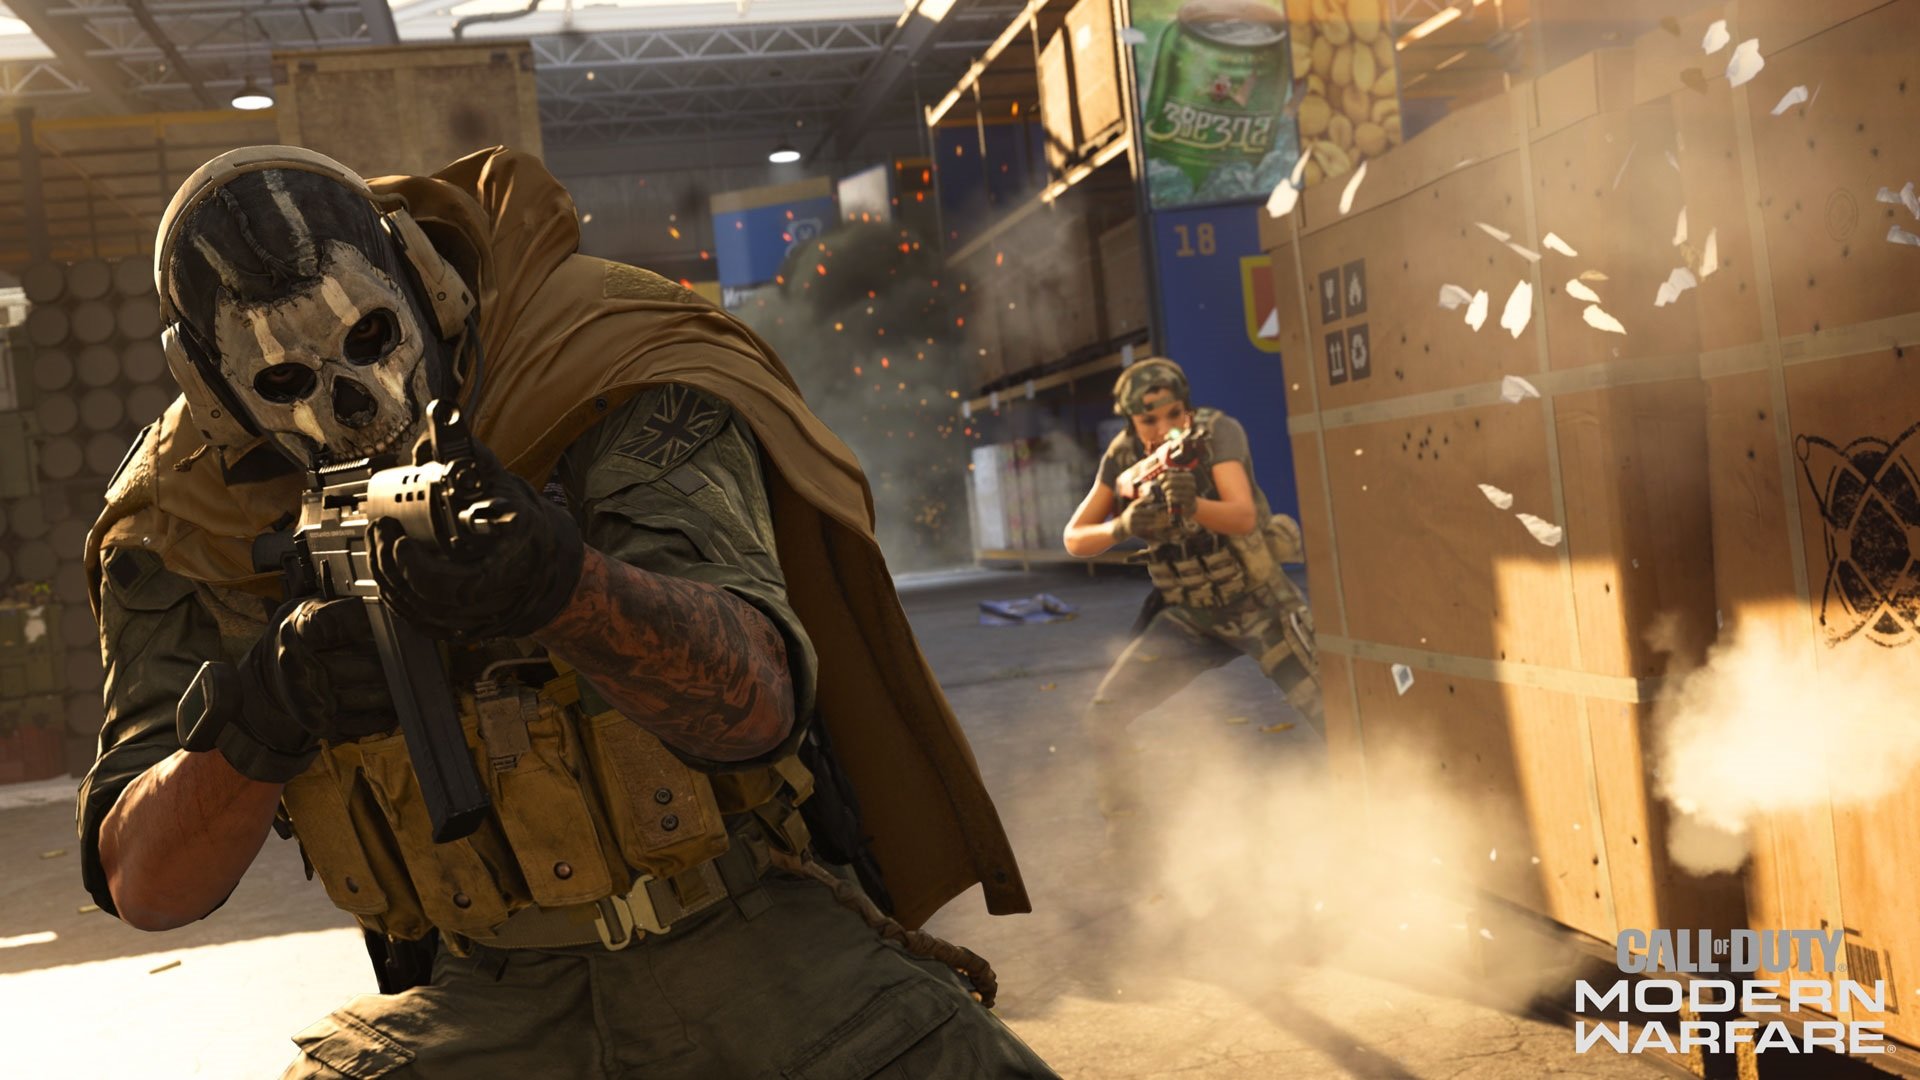 Free Call of Duty Modern Warfare multiplayer weekend announced  VGC